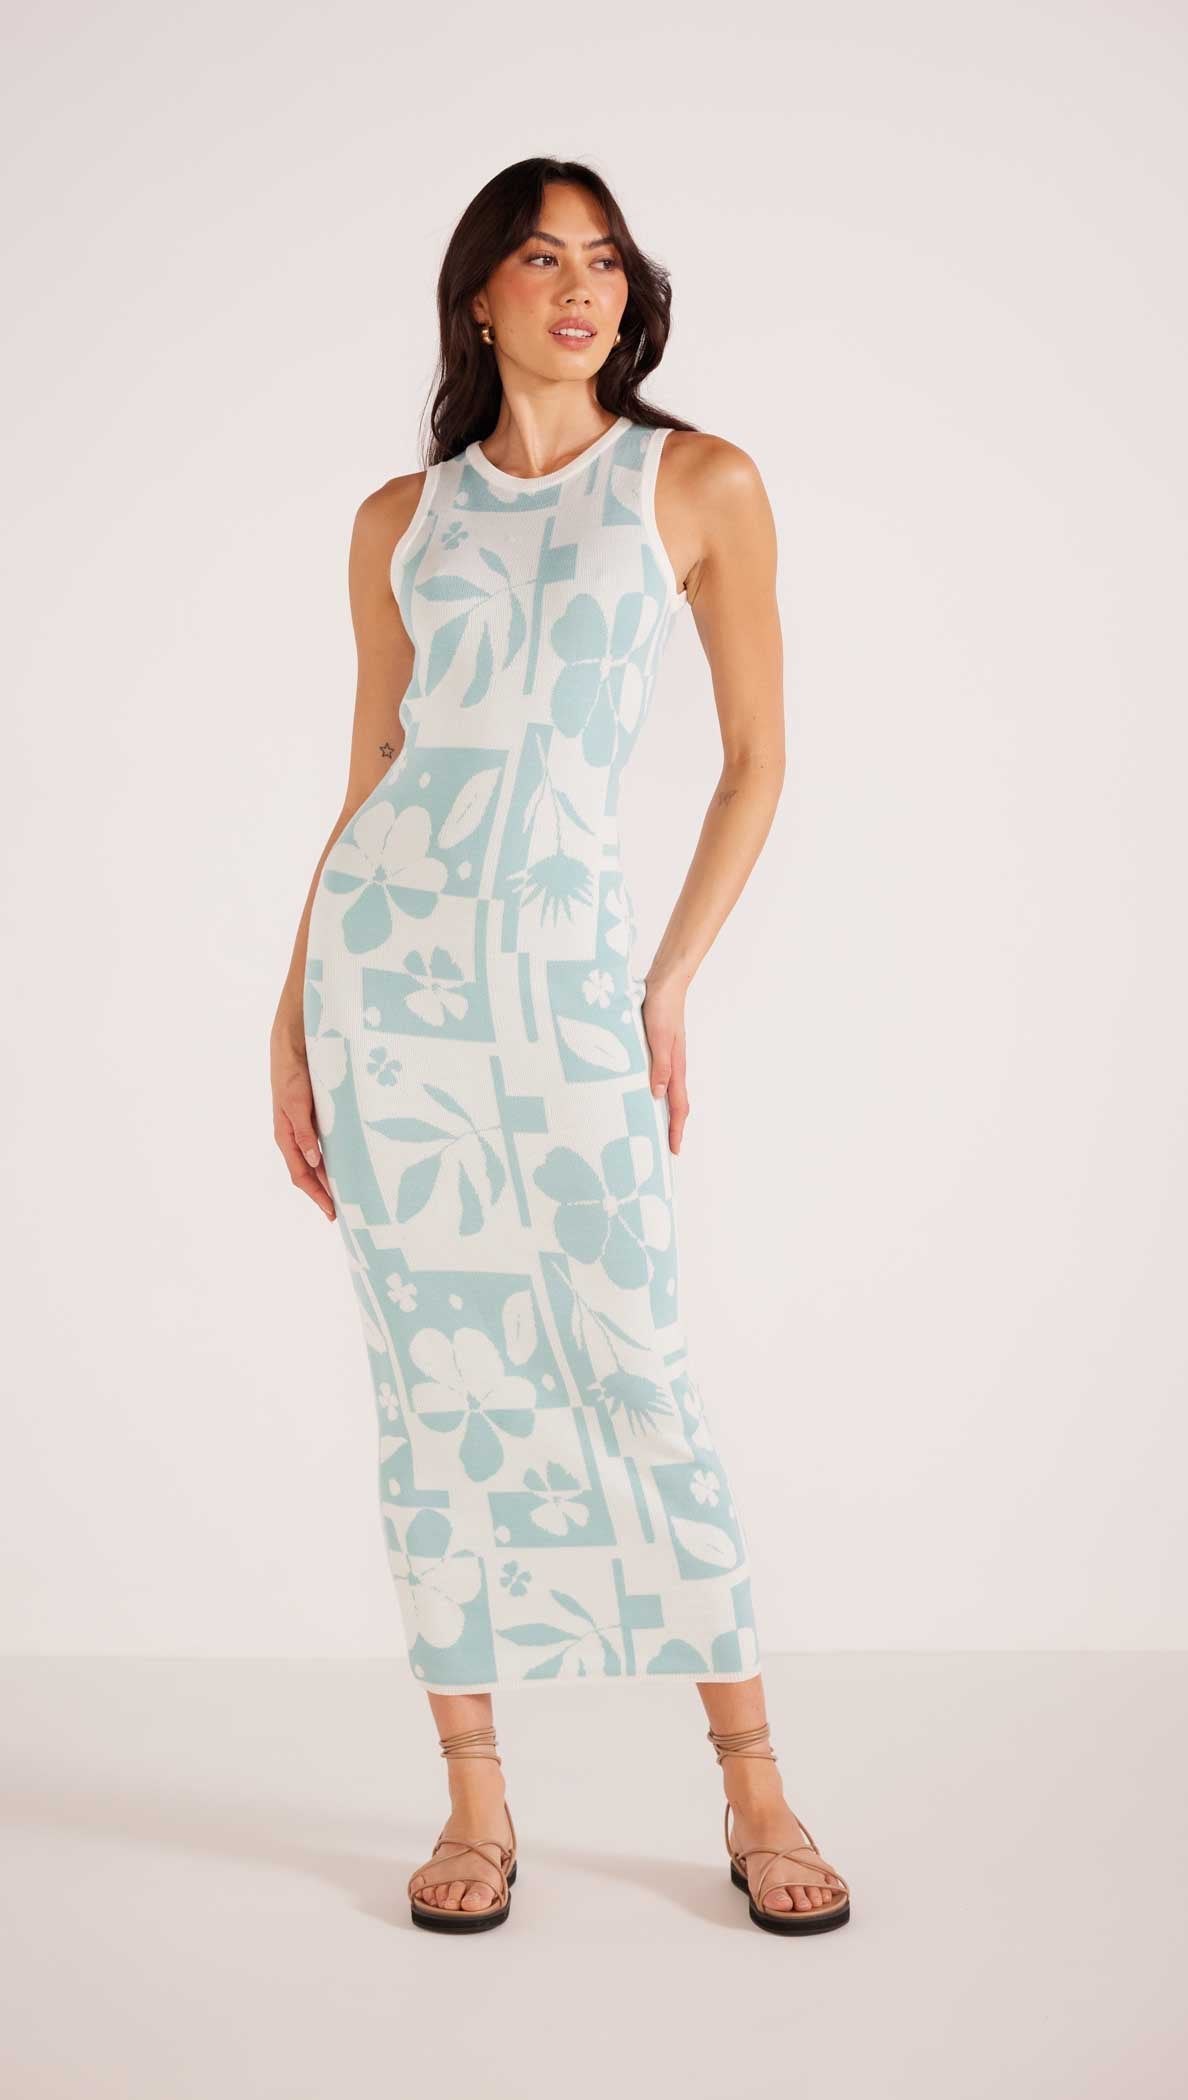 Lacy Intarsia Knit Midi Dress - White/Bluff